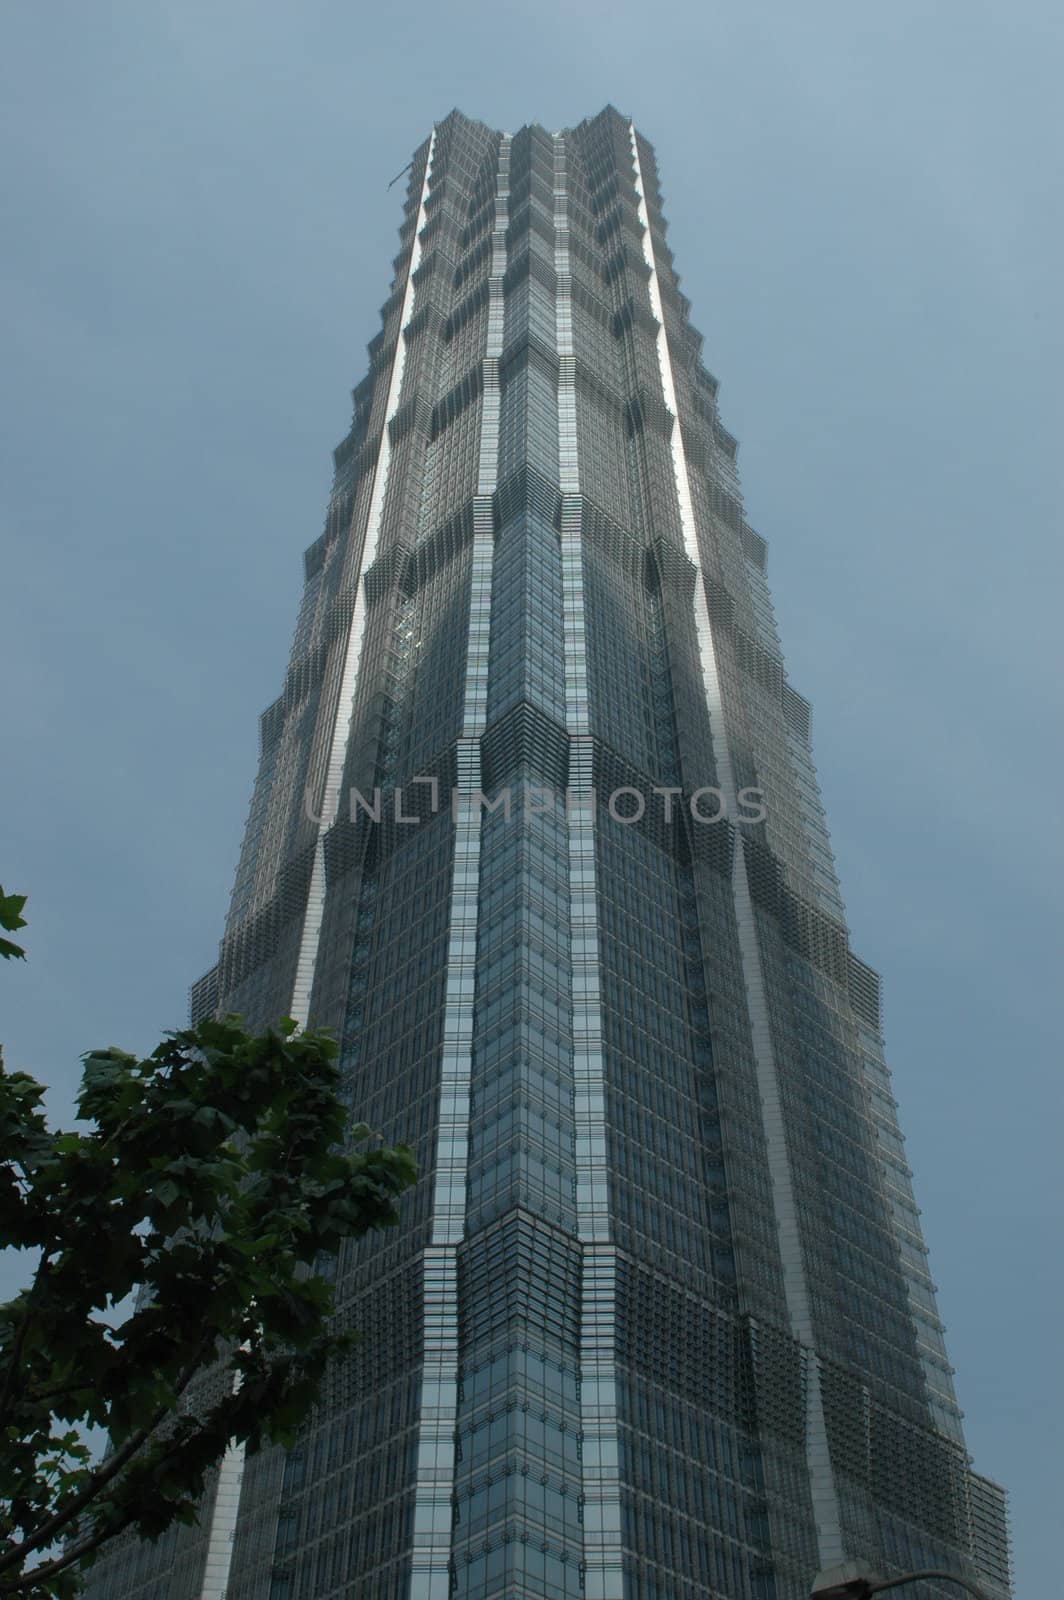 JinMao is second highest skyscraper in Shanghai.